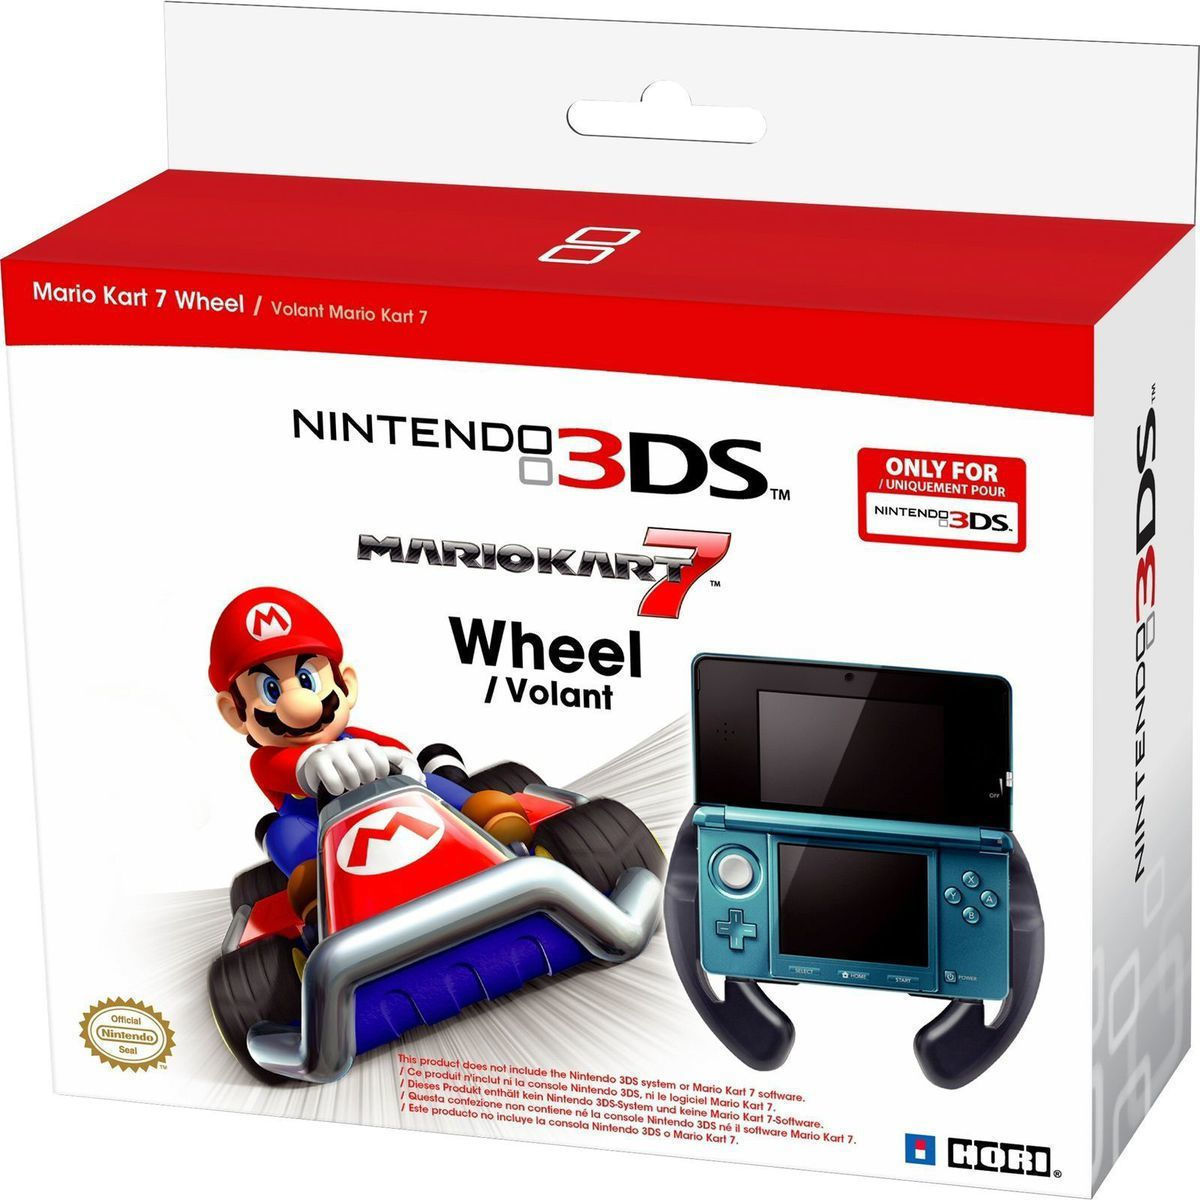 Rcm nintendo. Mario Kart 7 (Nintendo 3ds). Nintendo 3ds Mario Kart. Игрушка Нинтендо картинг Марио. Игры Нинтендо 3ds Mario.